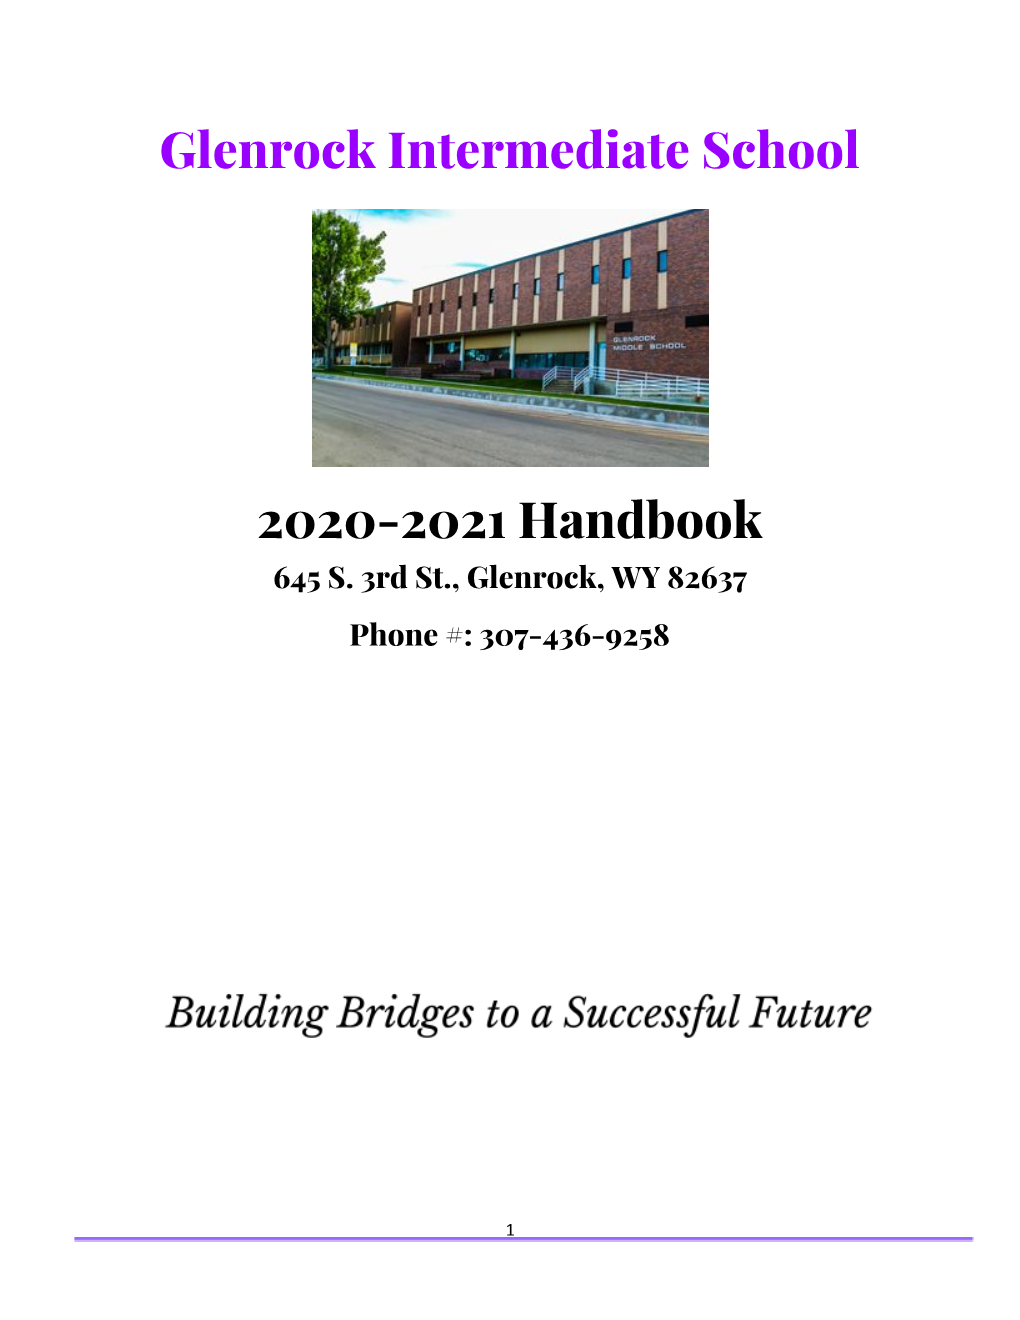 Glenrock Intermediate School 2020-2021 Handbook